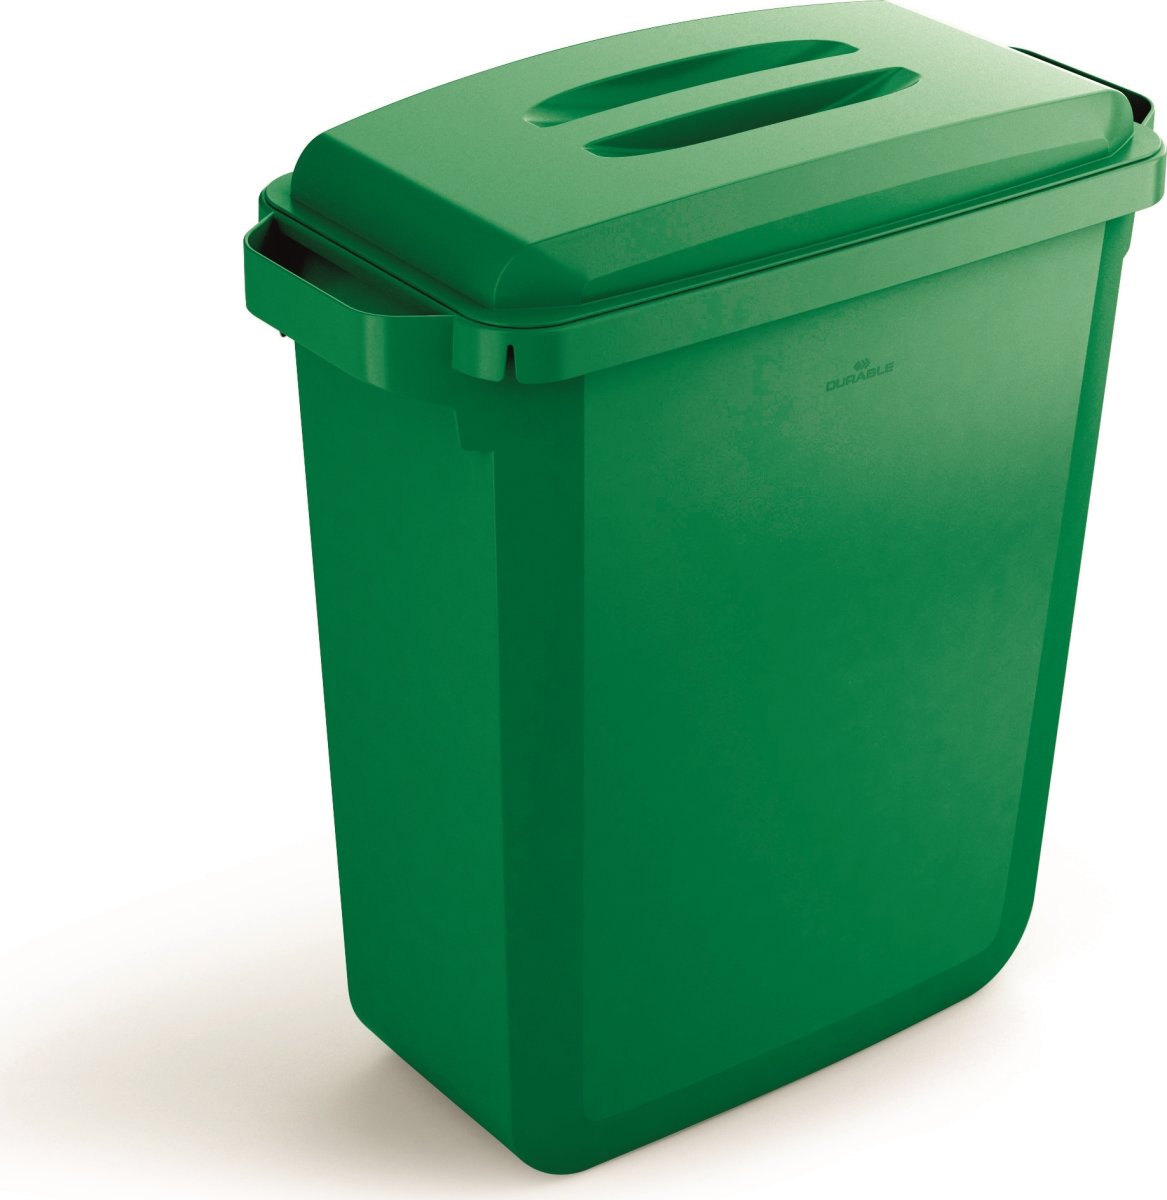 Låg "håndtag" til affaldsspand 60 l, Grøn